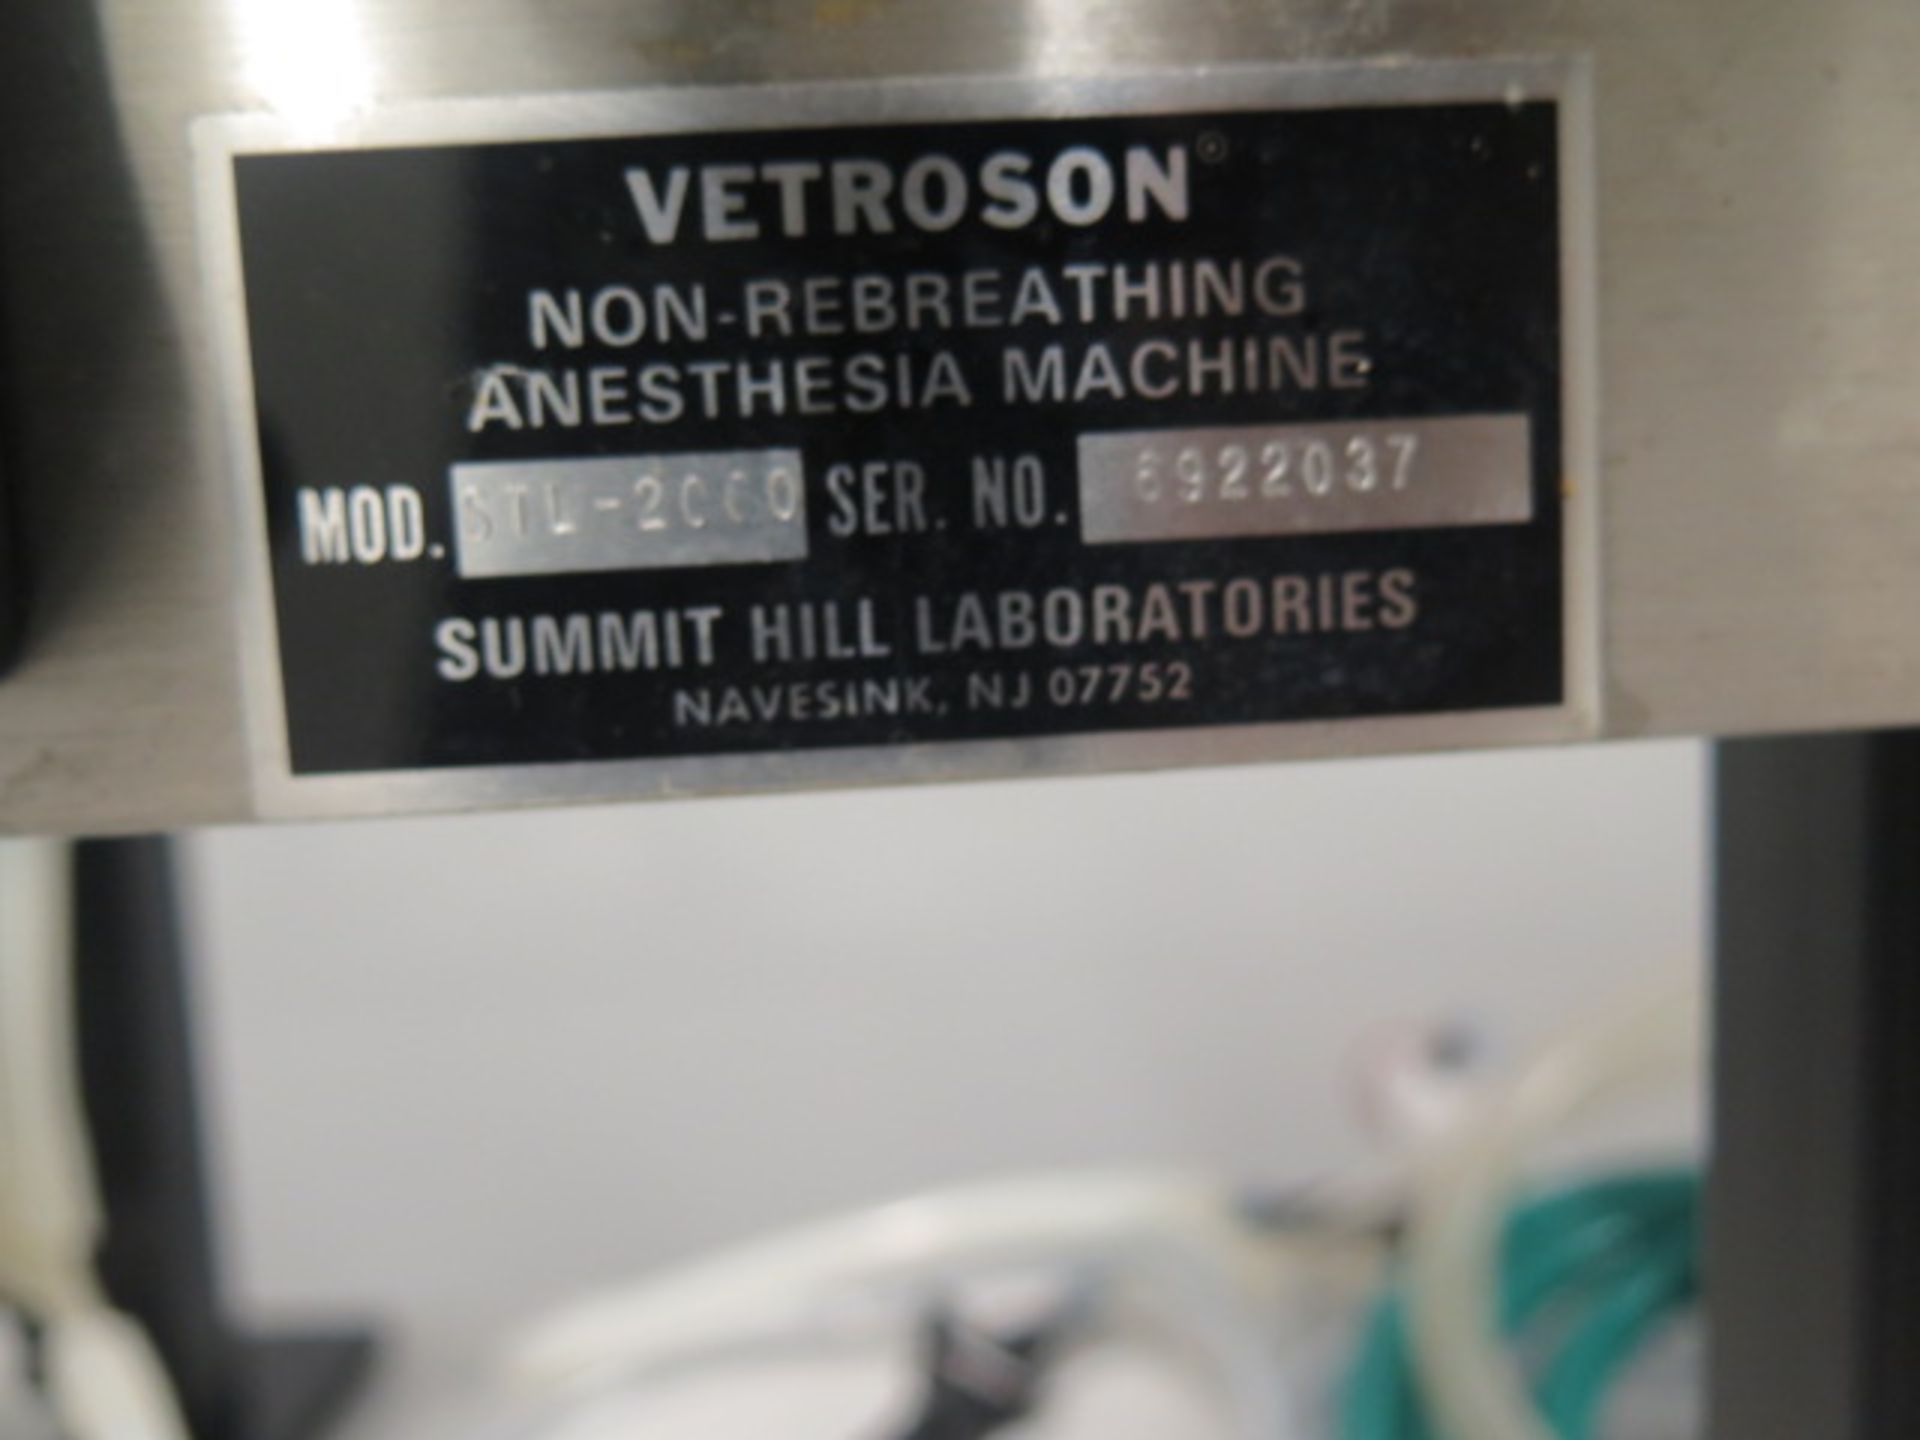 Vetroson / Summit Anesthesia Solutions mdl. STL-2000 Tabletop Isoflurane Non-Rebreathing - Image 5 of 5